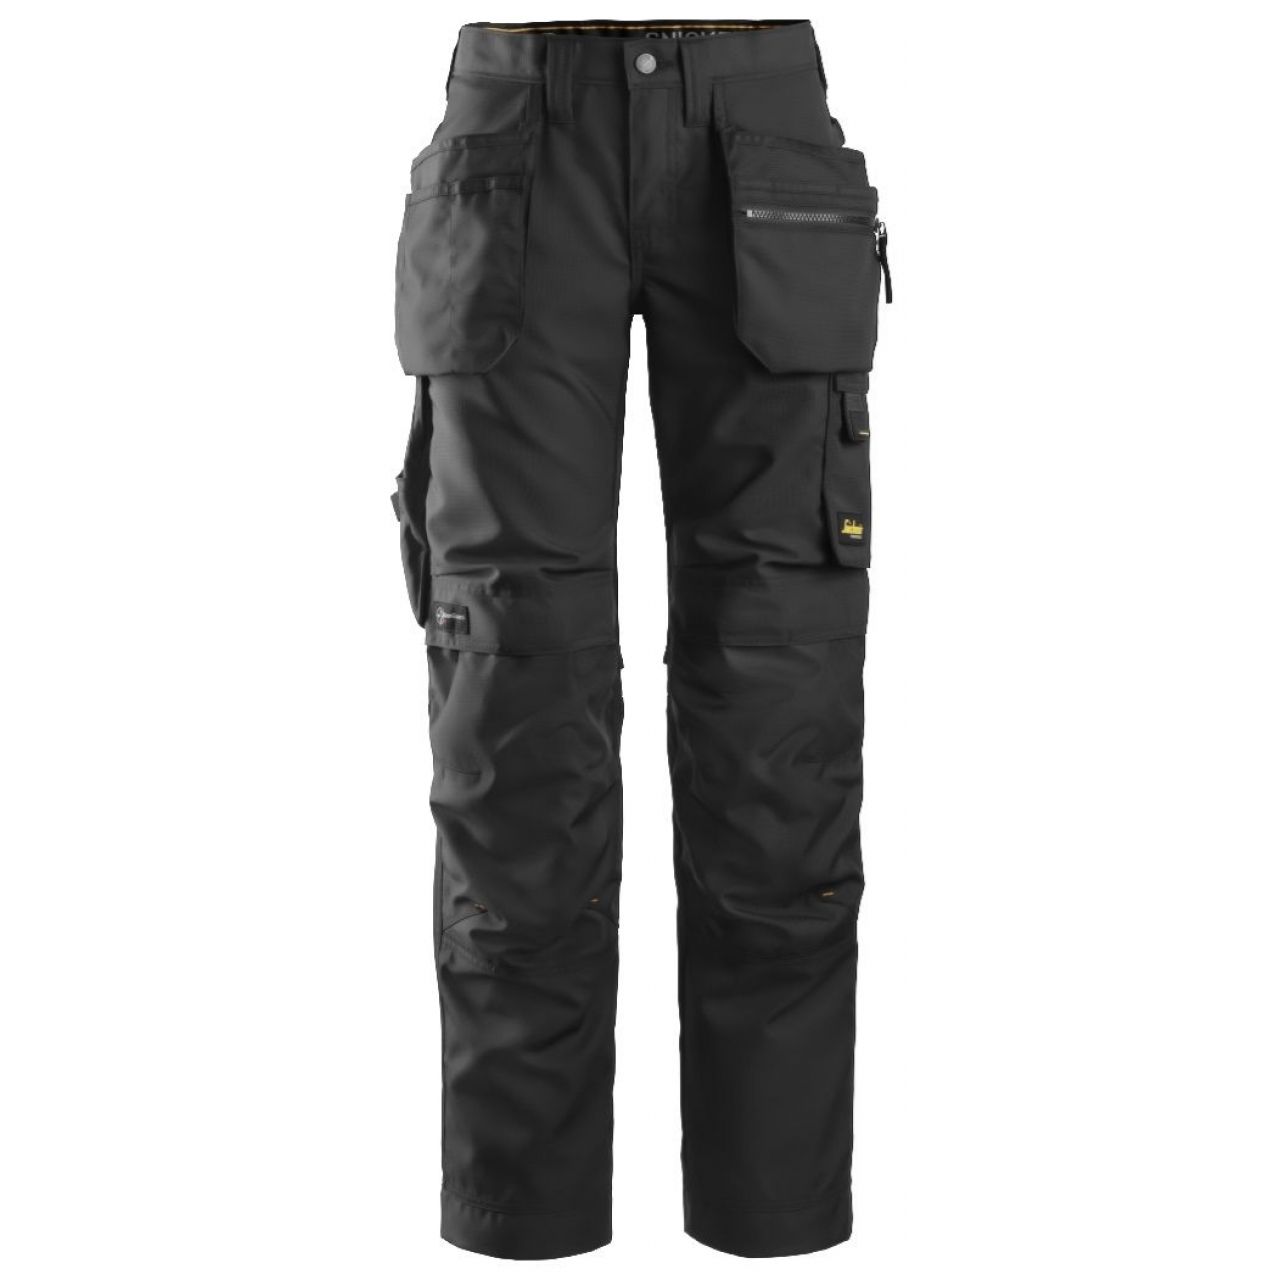 Pantalon de mujer AllroundWork+ con bolsillos flotantes negro talla 018